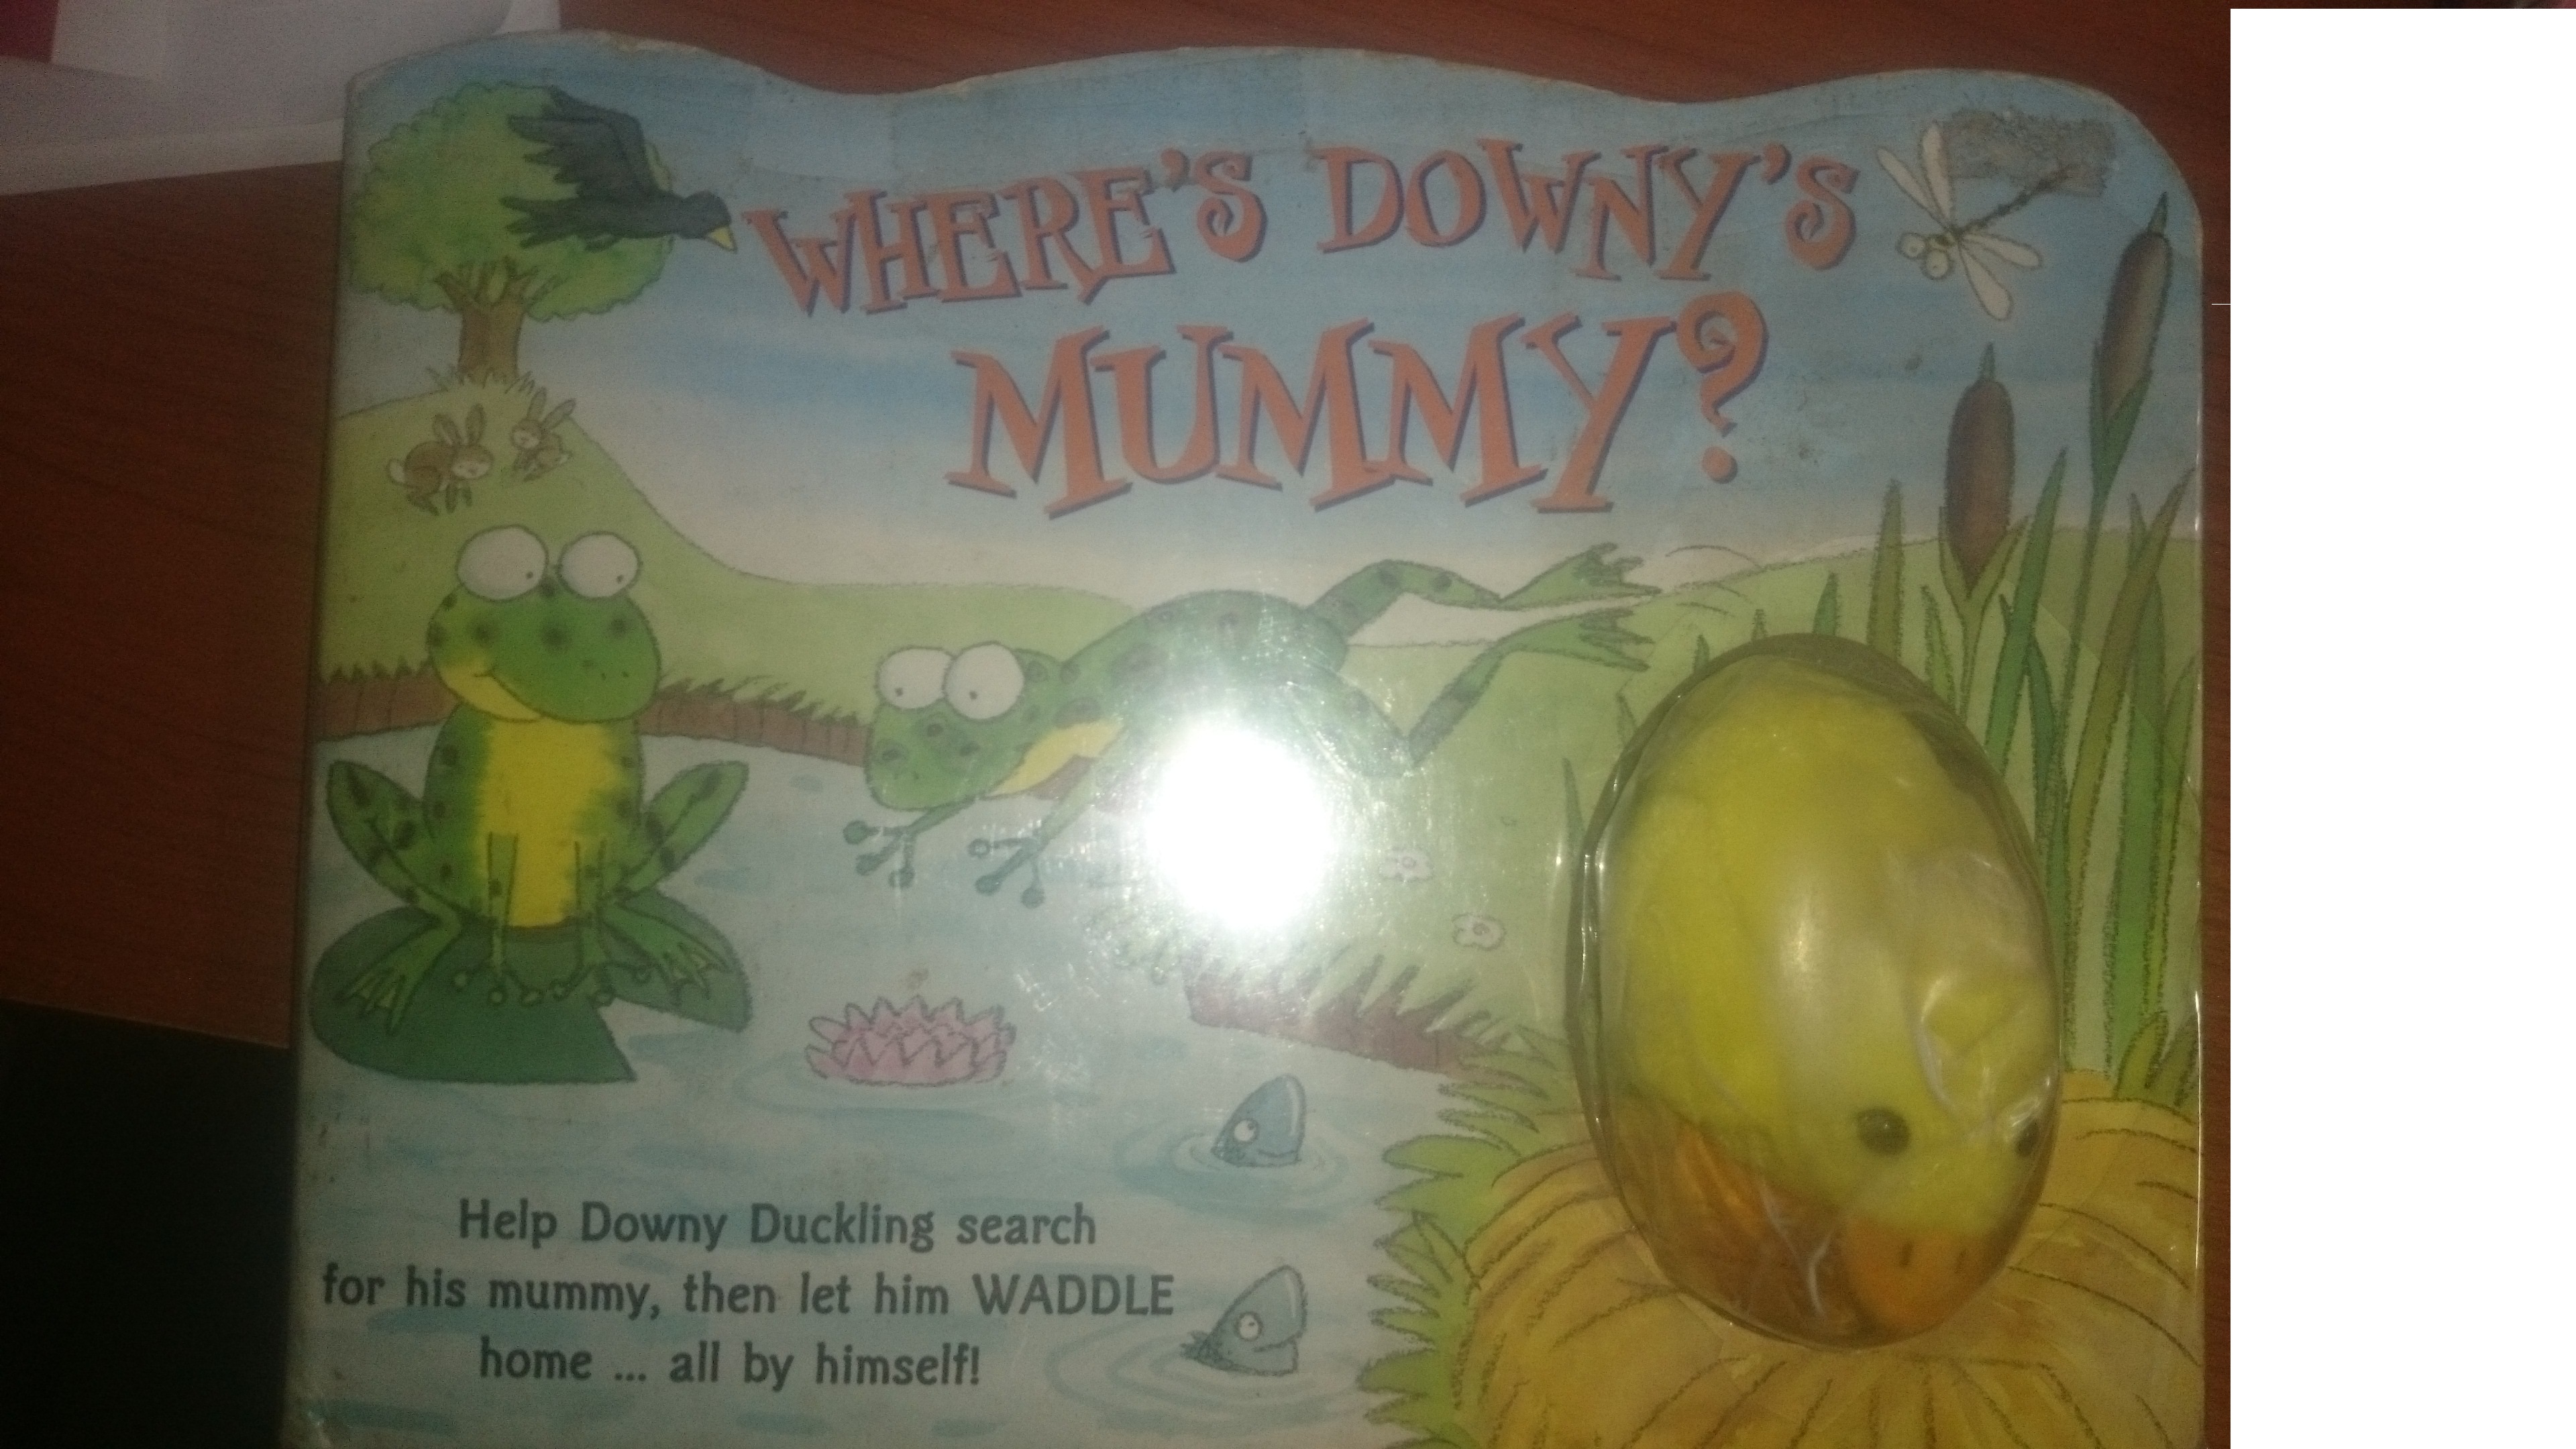 Where's Downy's Mummy?